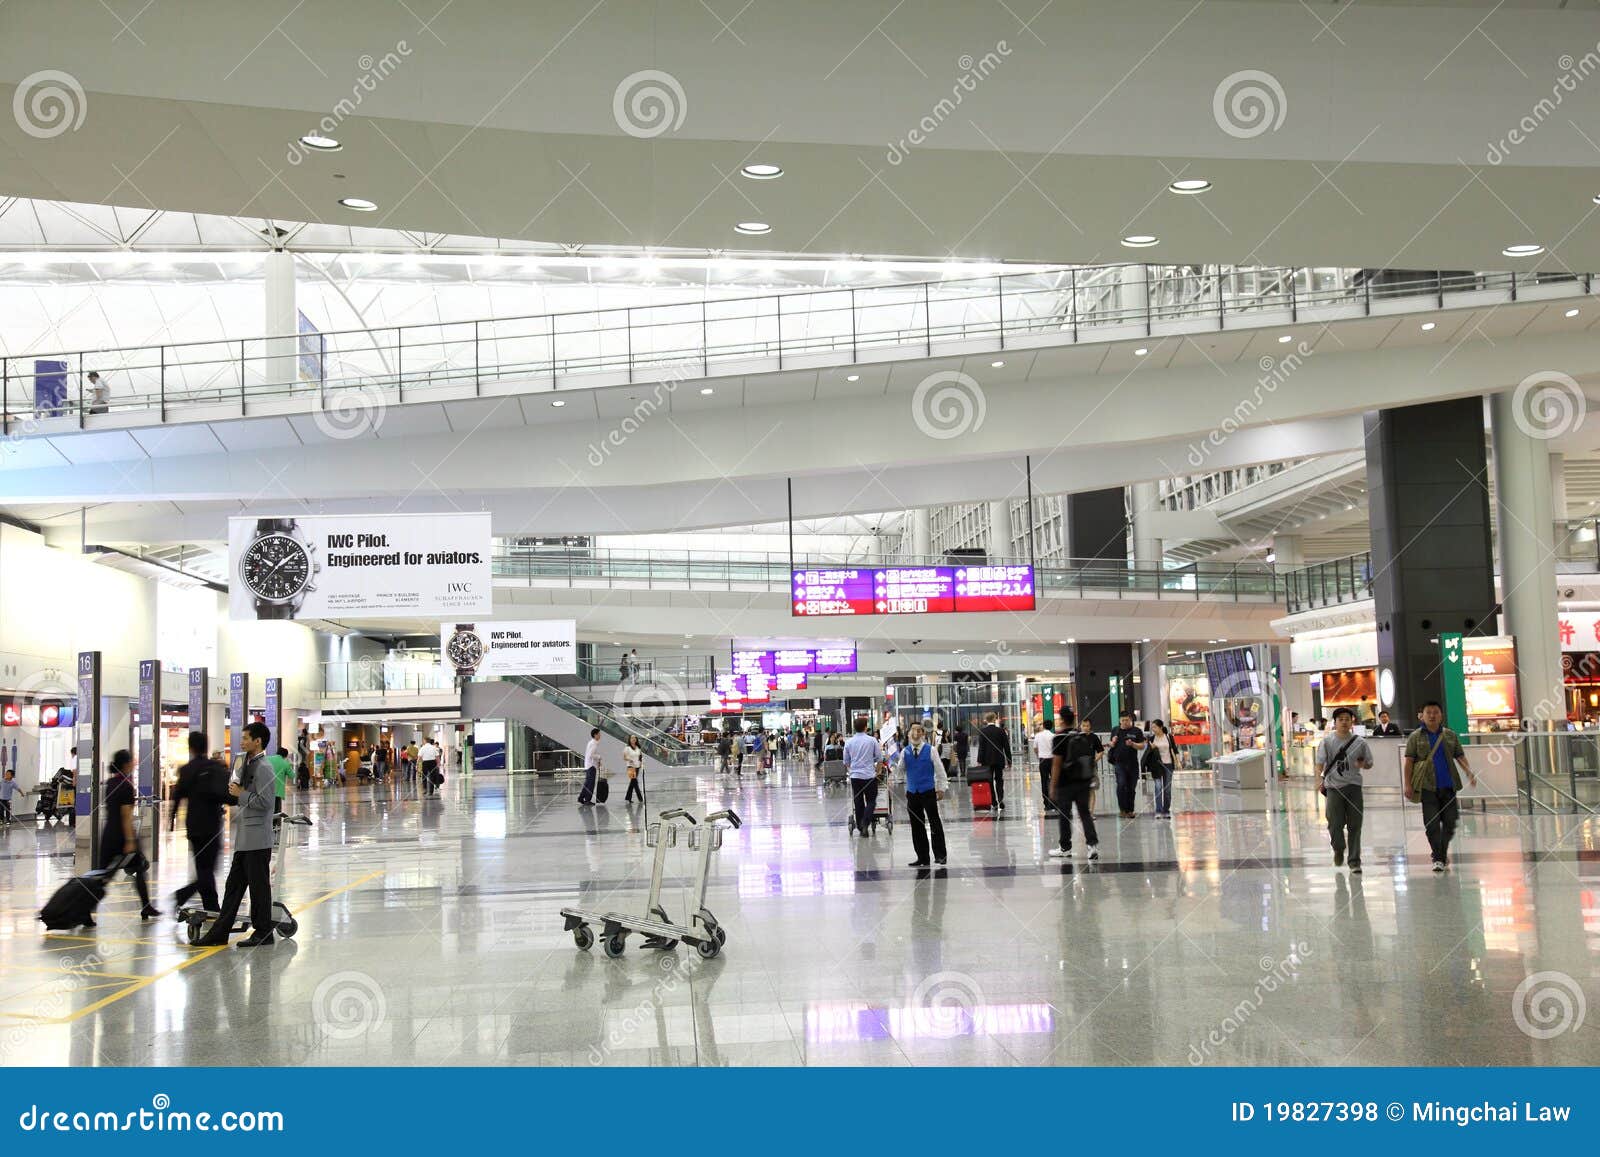 Aeroportul internațional Hong Kong. Aeroport din Hong Kong.